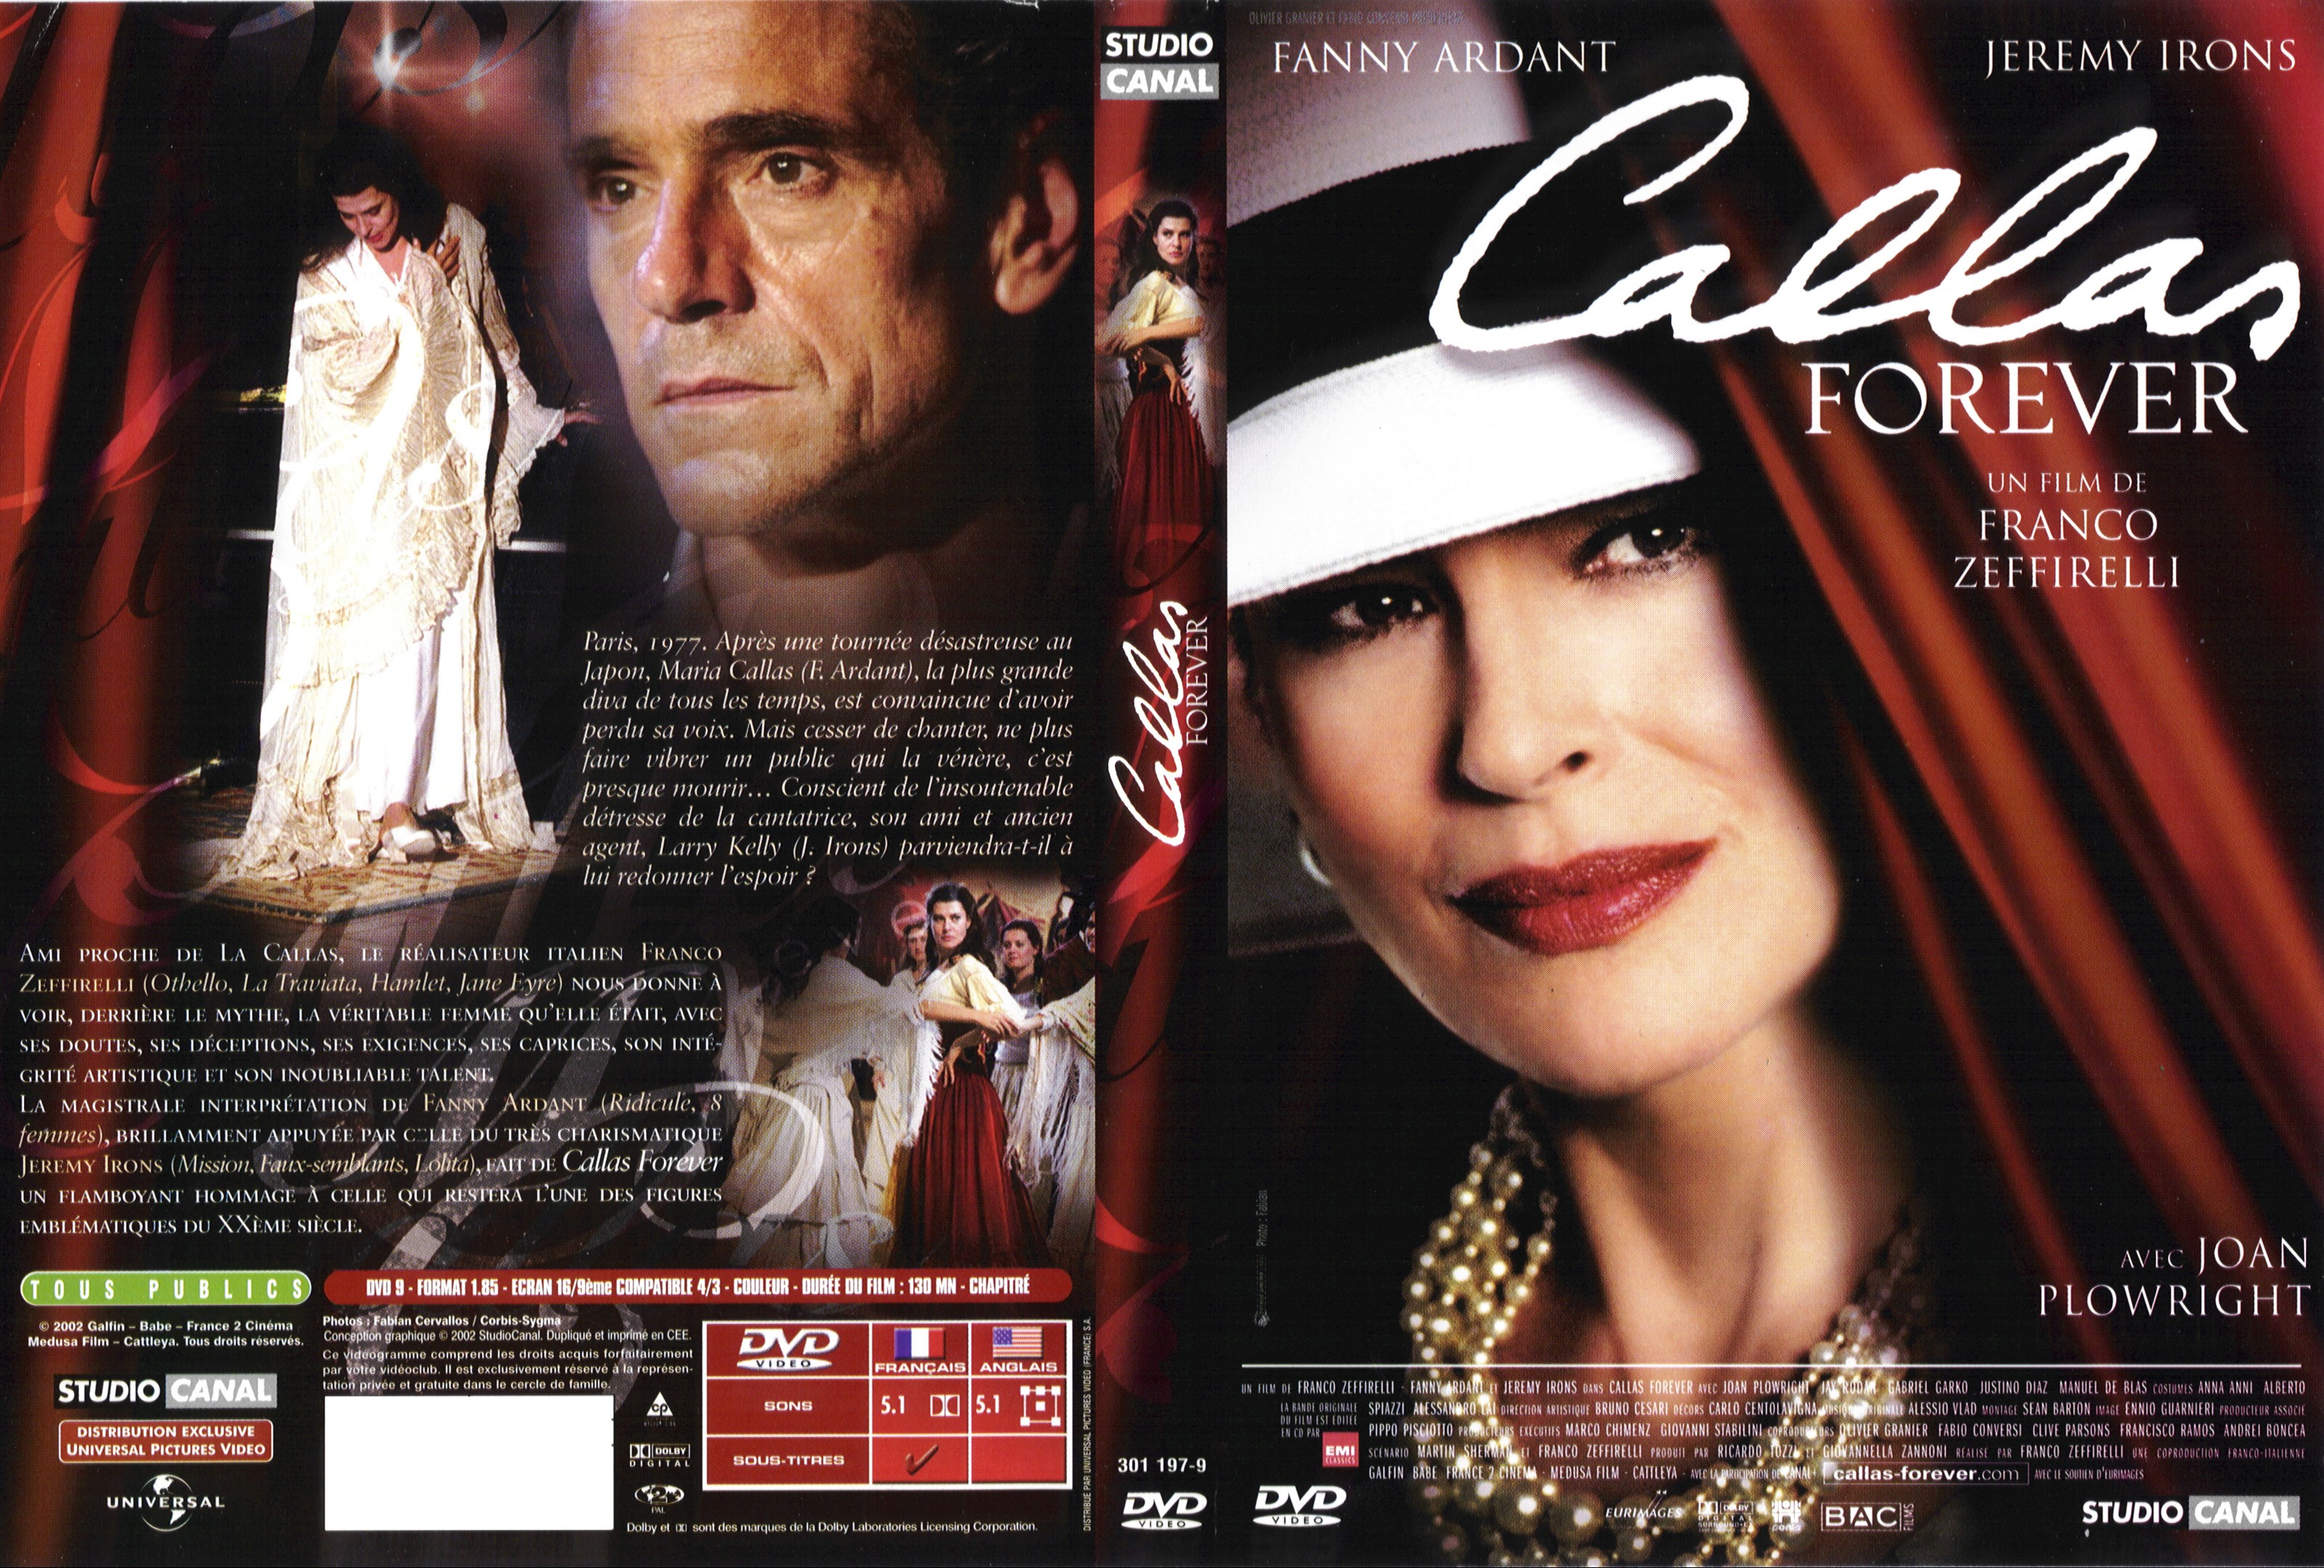 Jaquette DVD Callas forever